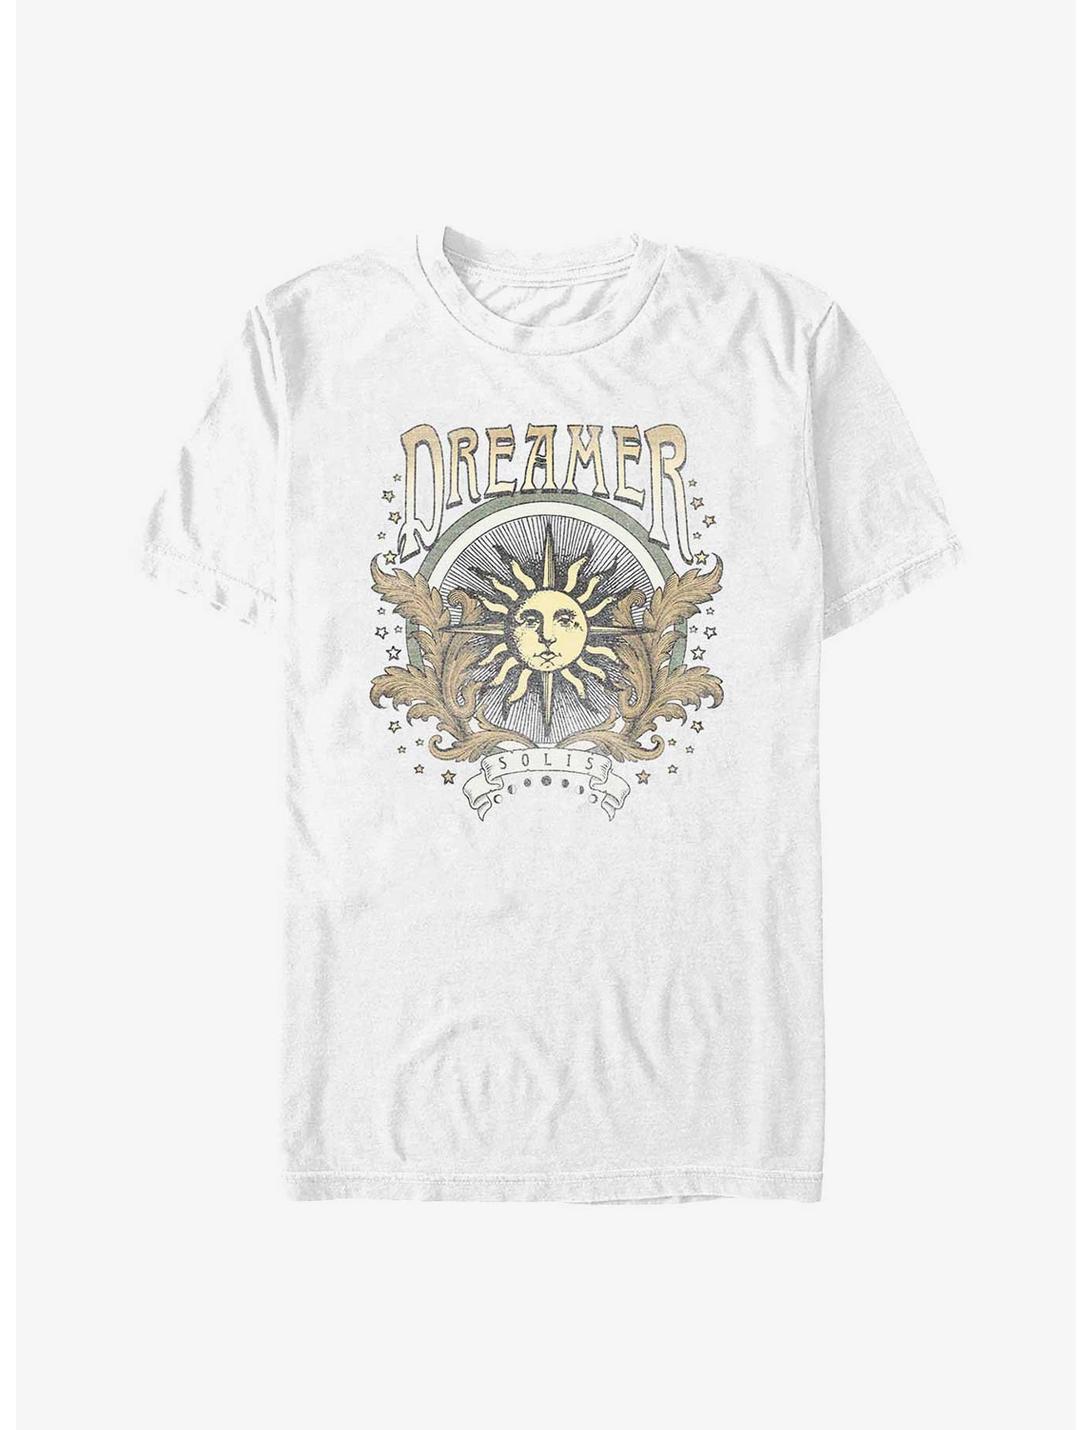 Dreamer Solis T-Shirt, WHITE, hi-res